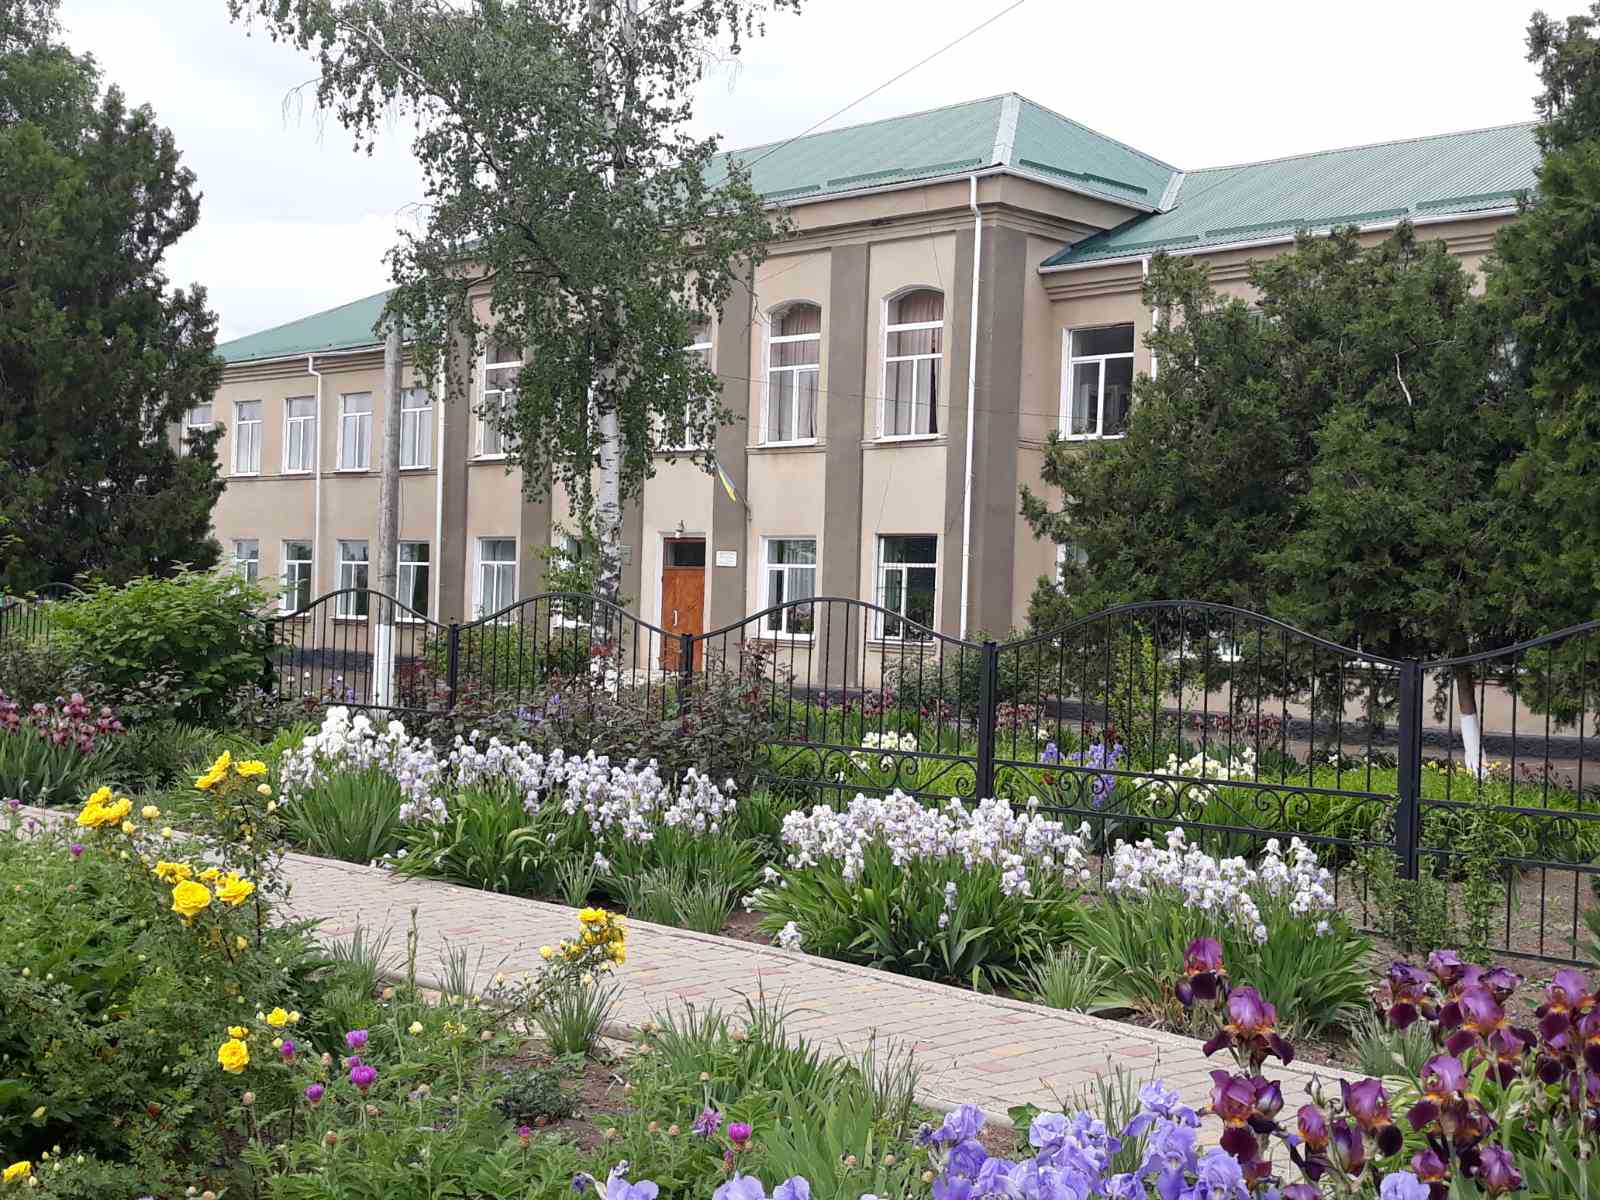 Velykoploske basic educational institution – Lyceum